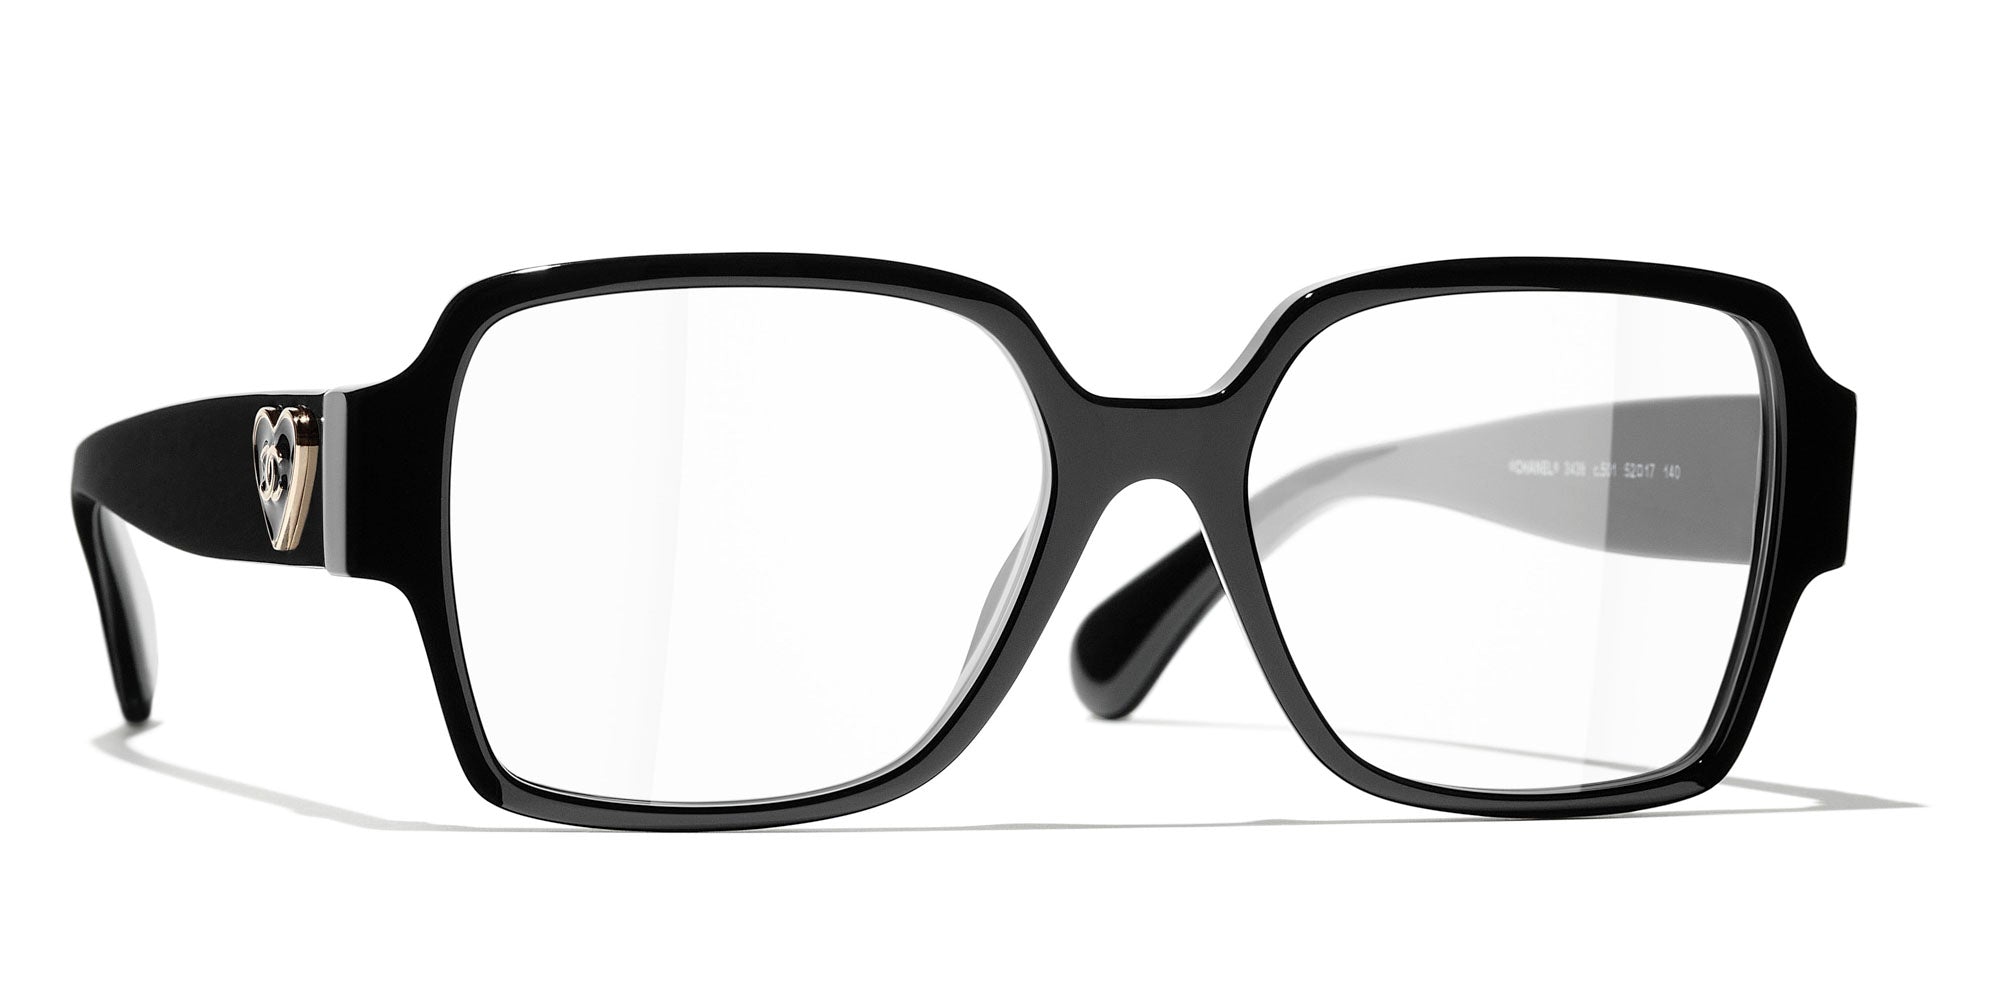 Chanel Iman's Genius Tip for Pulling Off Geometric Sunglasses